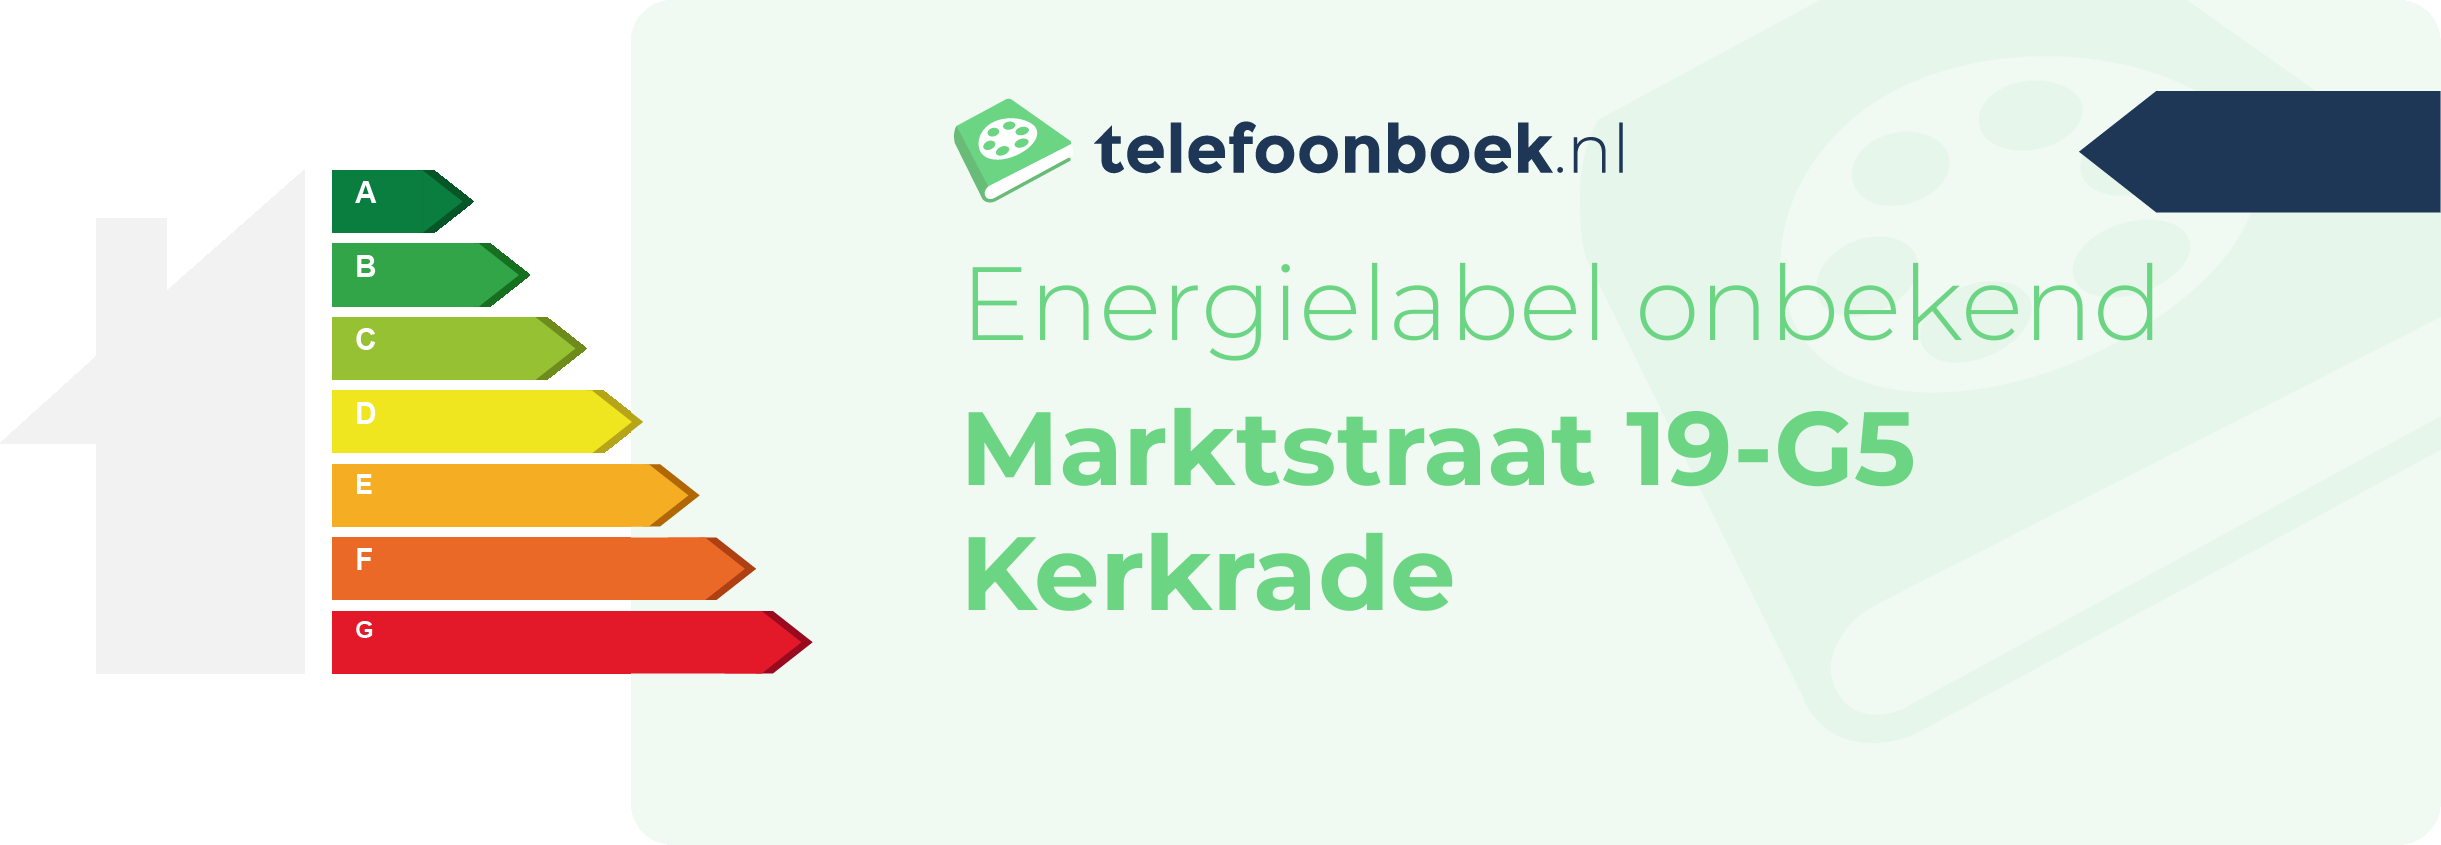 Energielabel Marktstraat 19-G5 Kerkrade